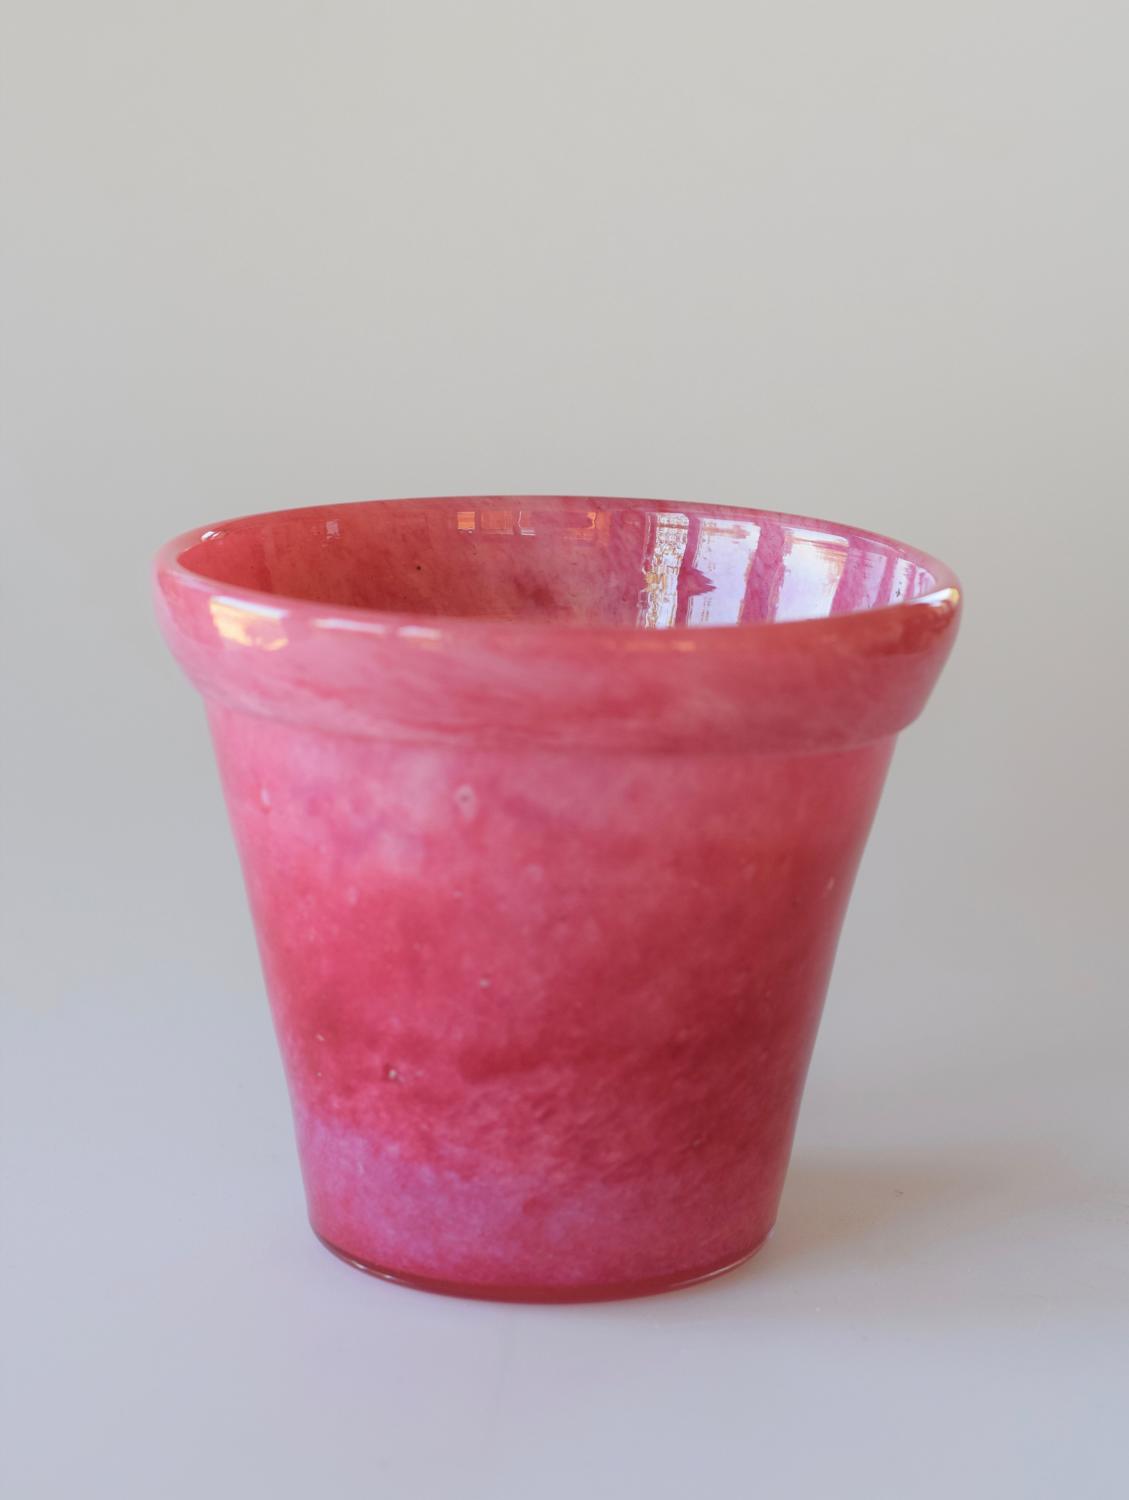 Small pink plant pot vase